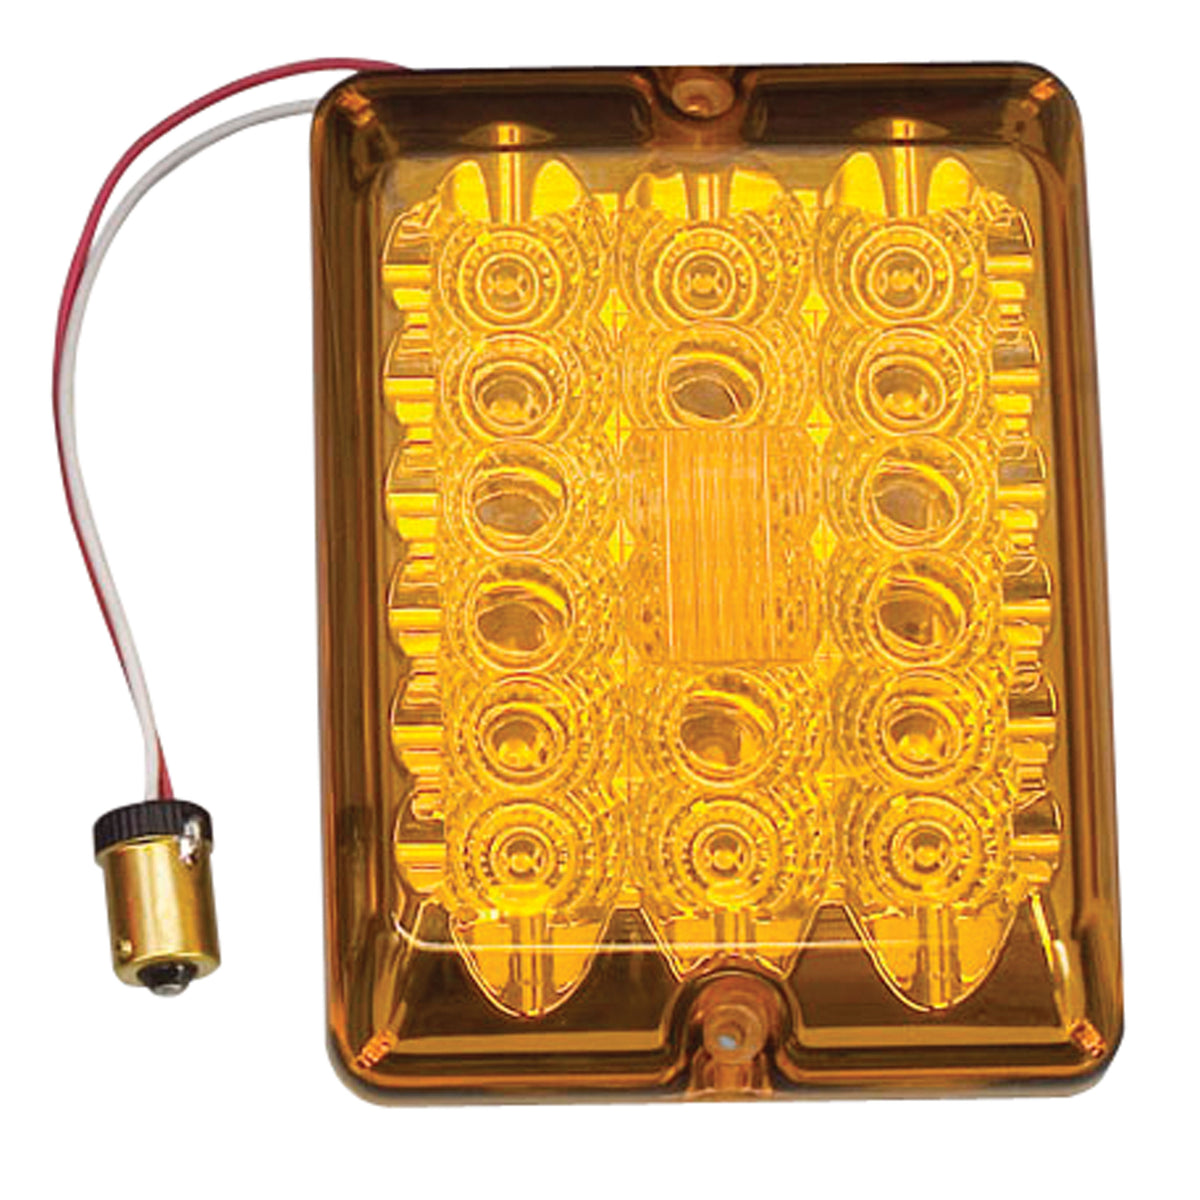 Bargman 42-84-412 Turn Light #84 LED Upgrade Module - Amber